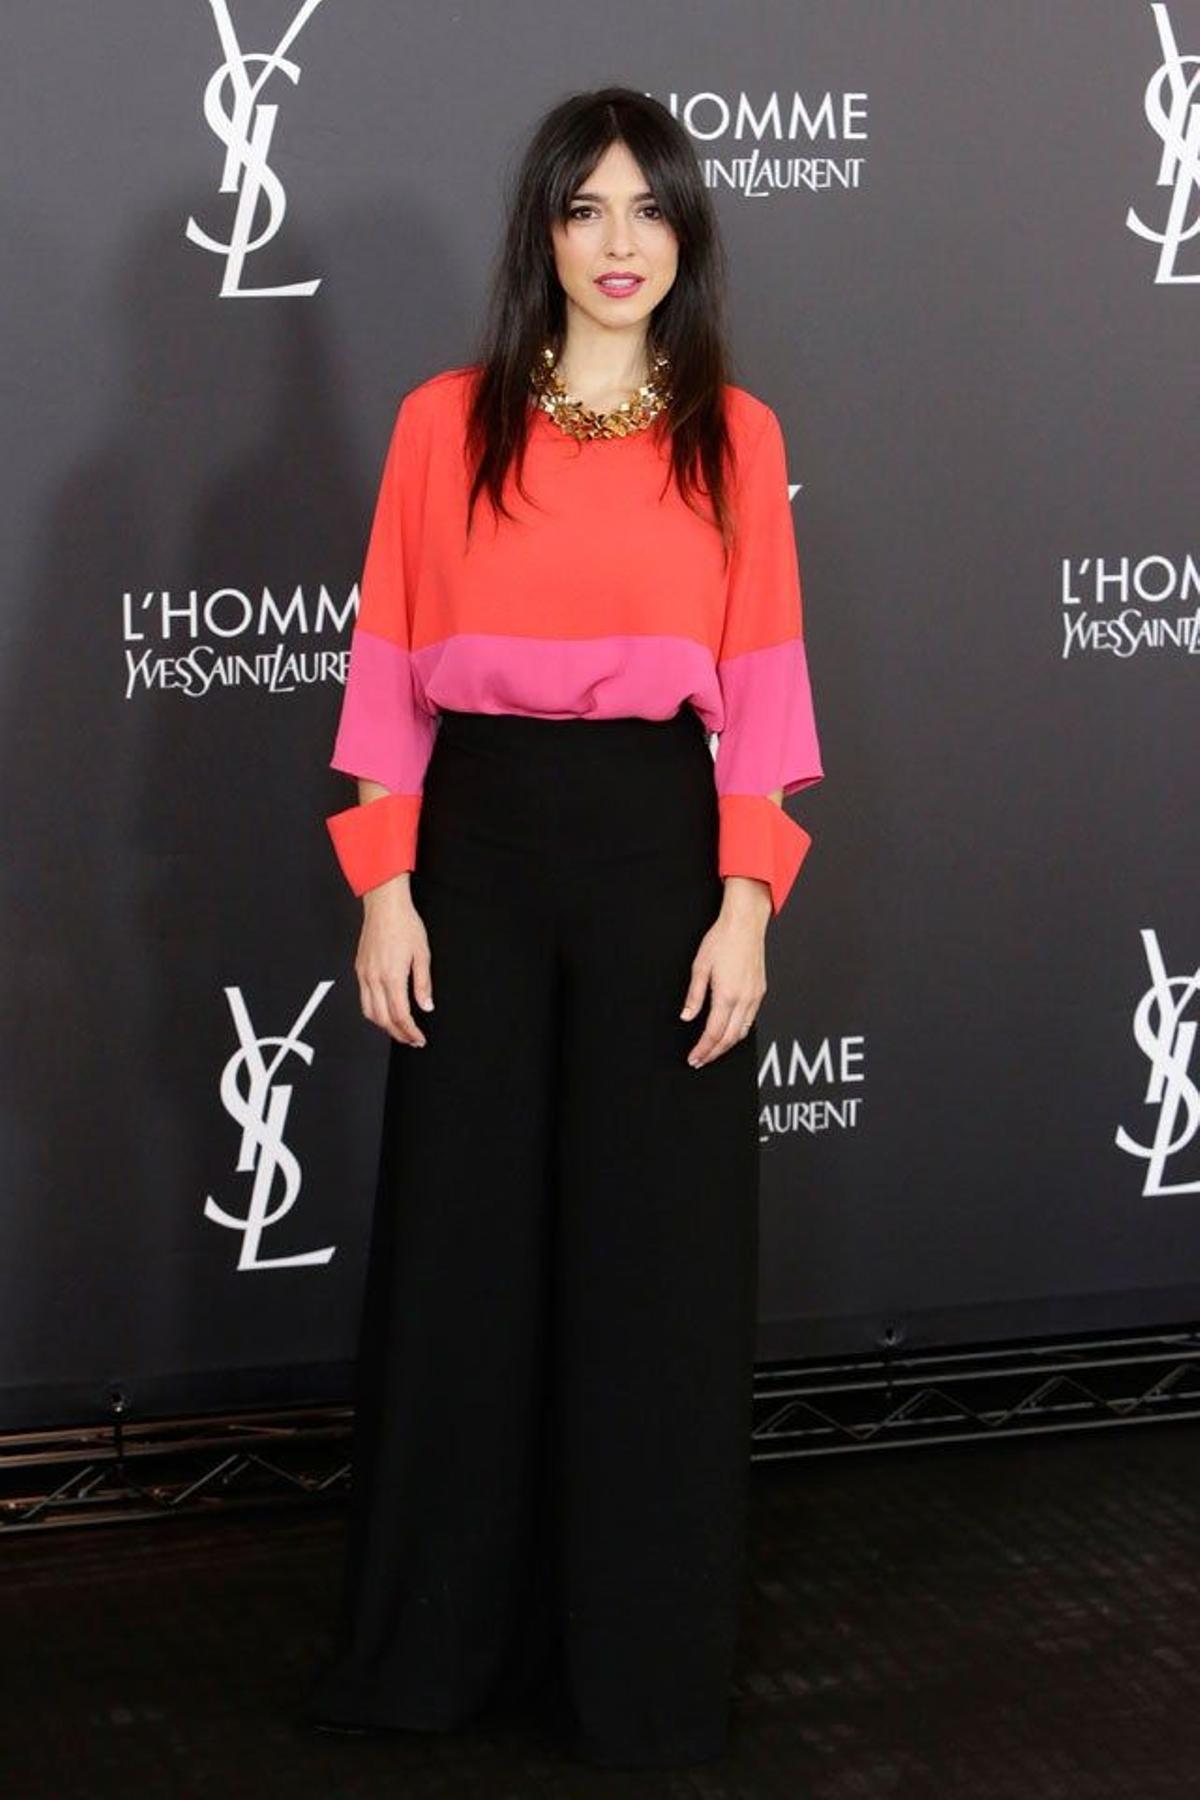 Cristina Brondo, en la fiesta de aniversario L'Homme de Yves Saint Laurent.